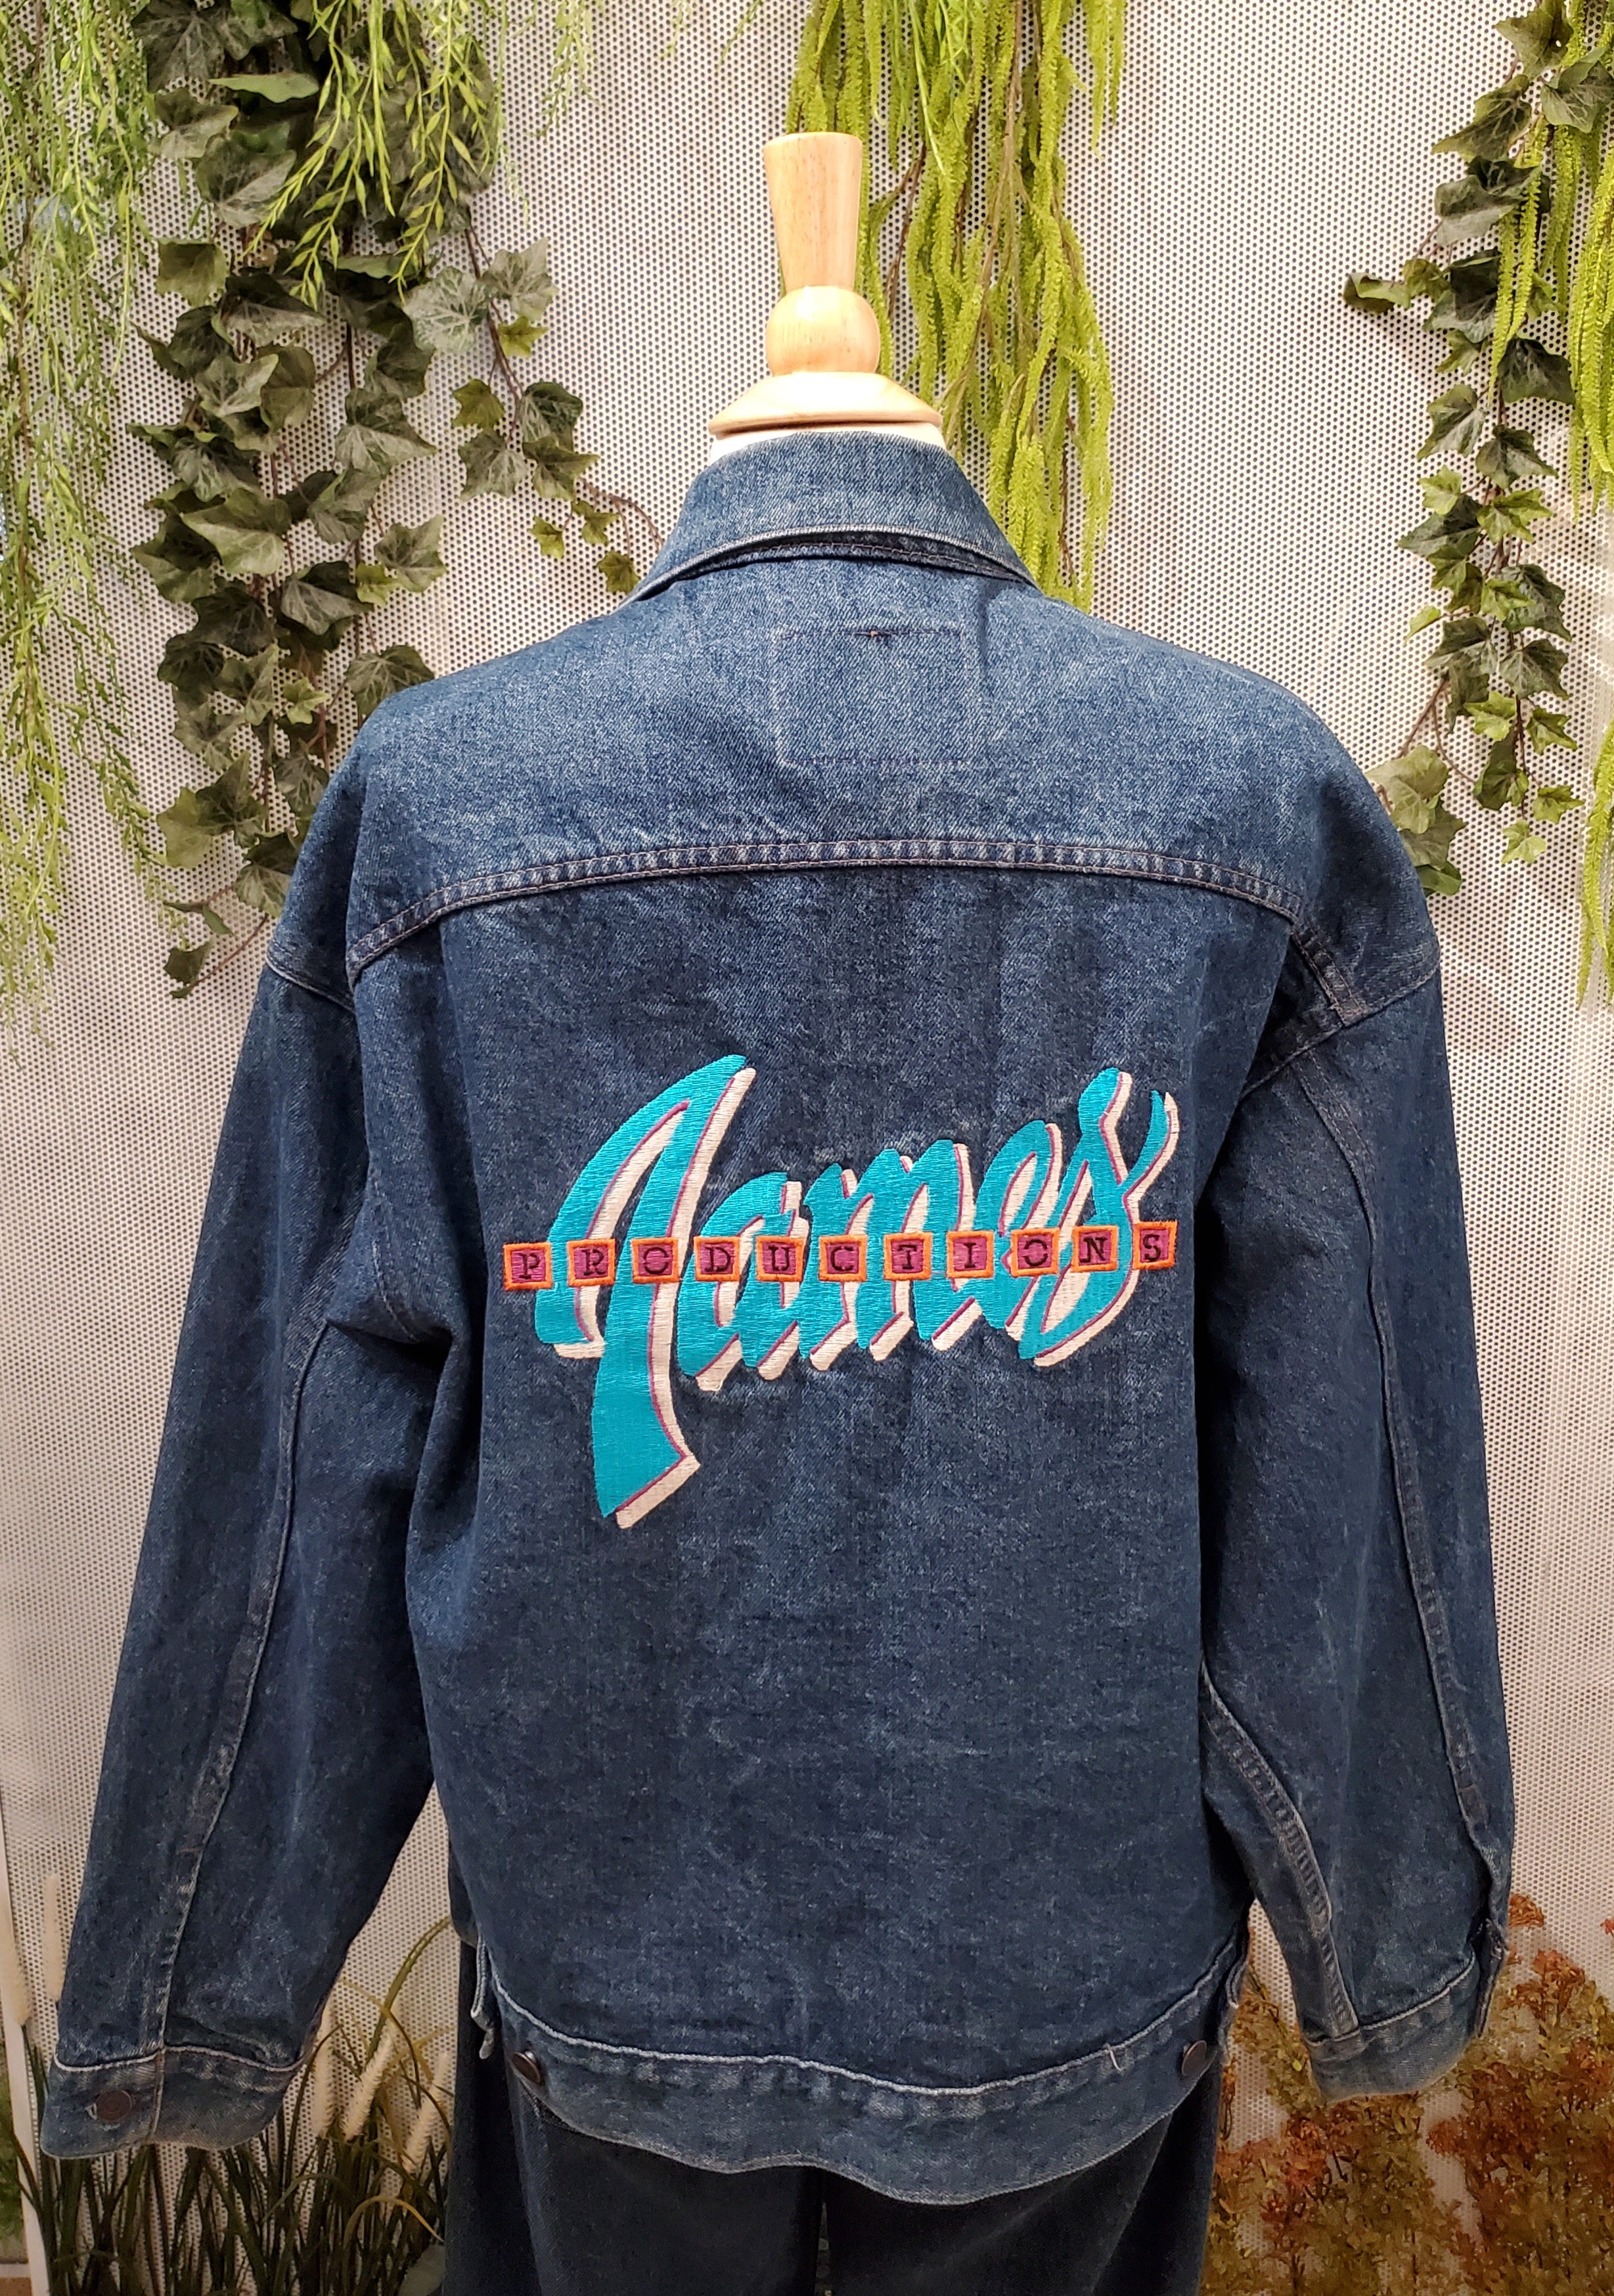 1980’s “James Production” Denim Jacket